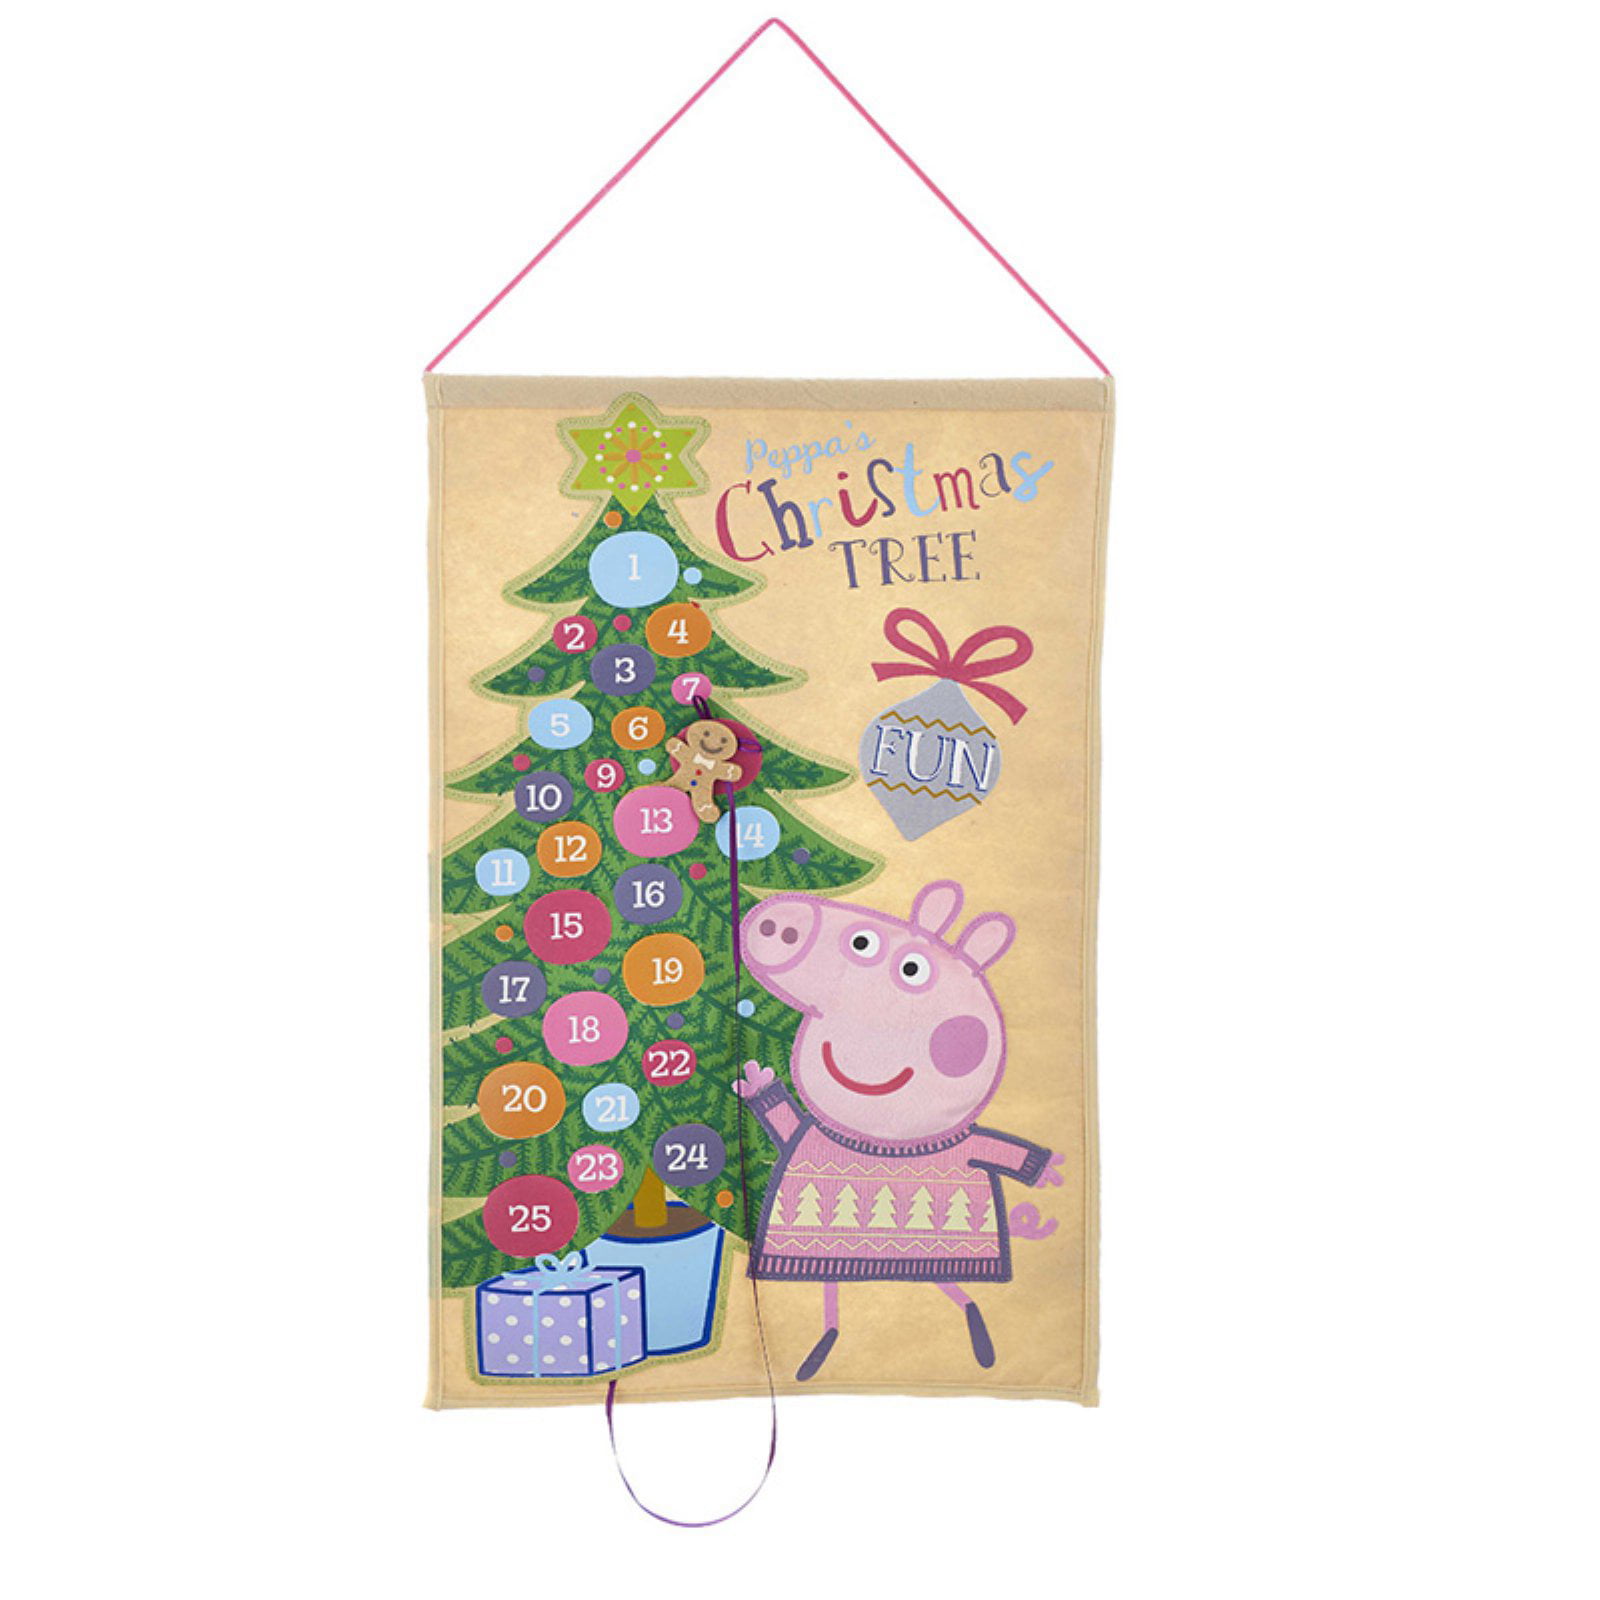 peppa pig advent calendar walmart